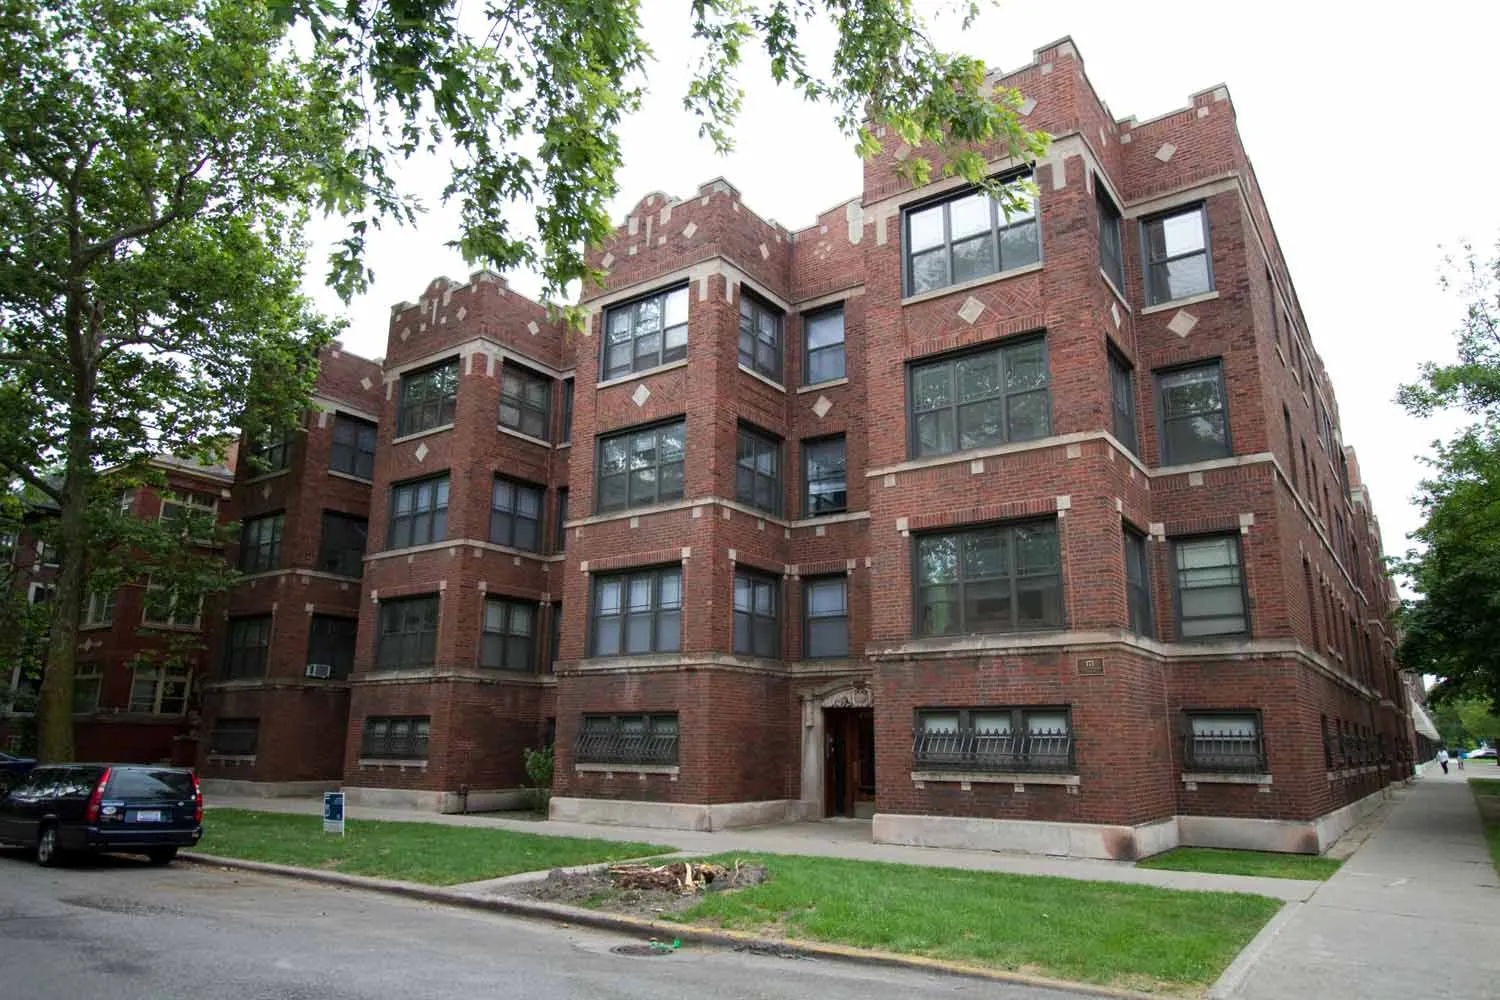 5300-5308 S. Greenwood Apartments